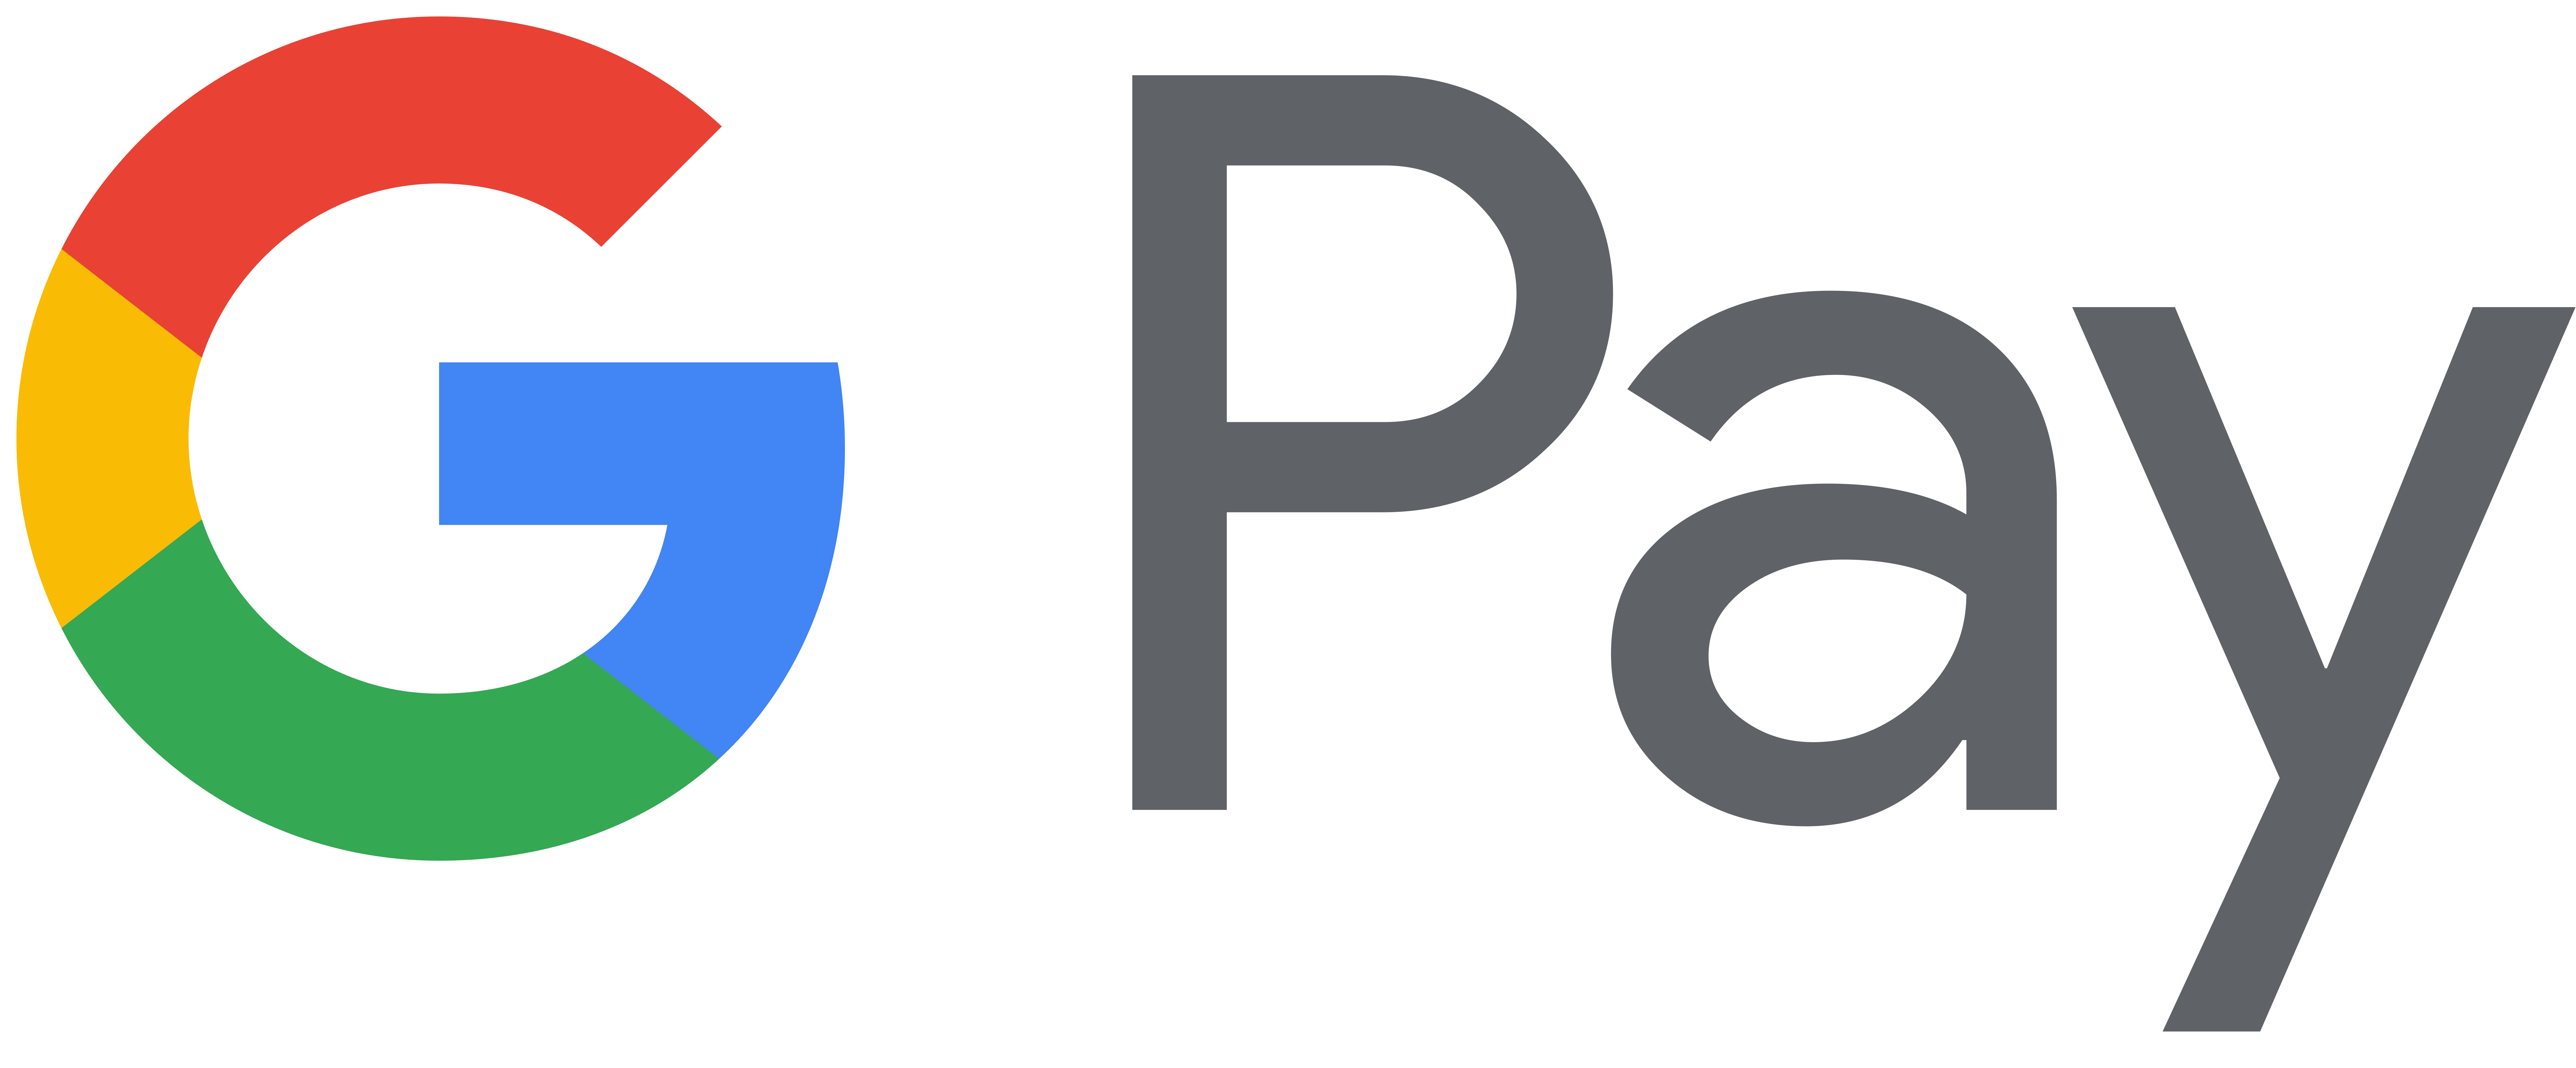 Веб Google logo PNG Picture